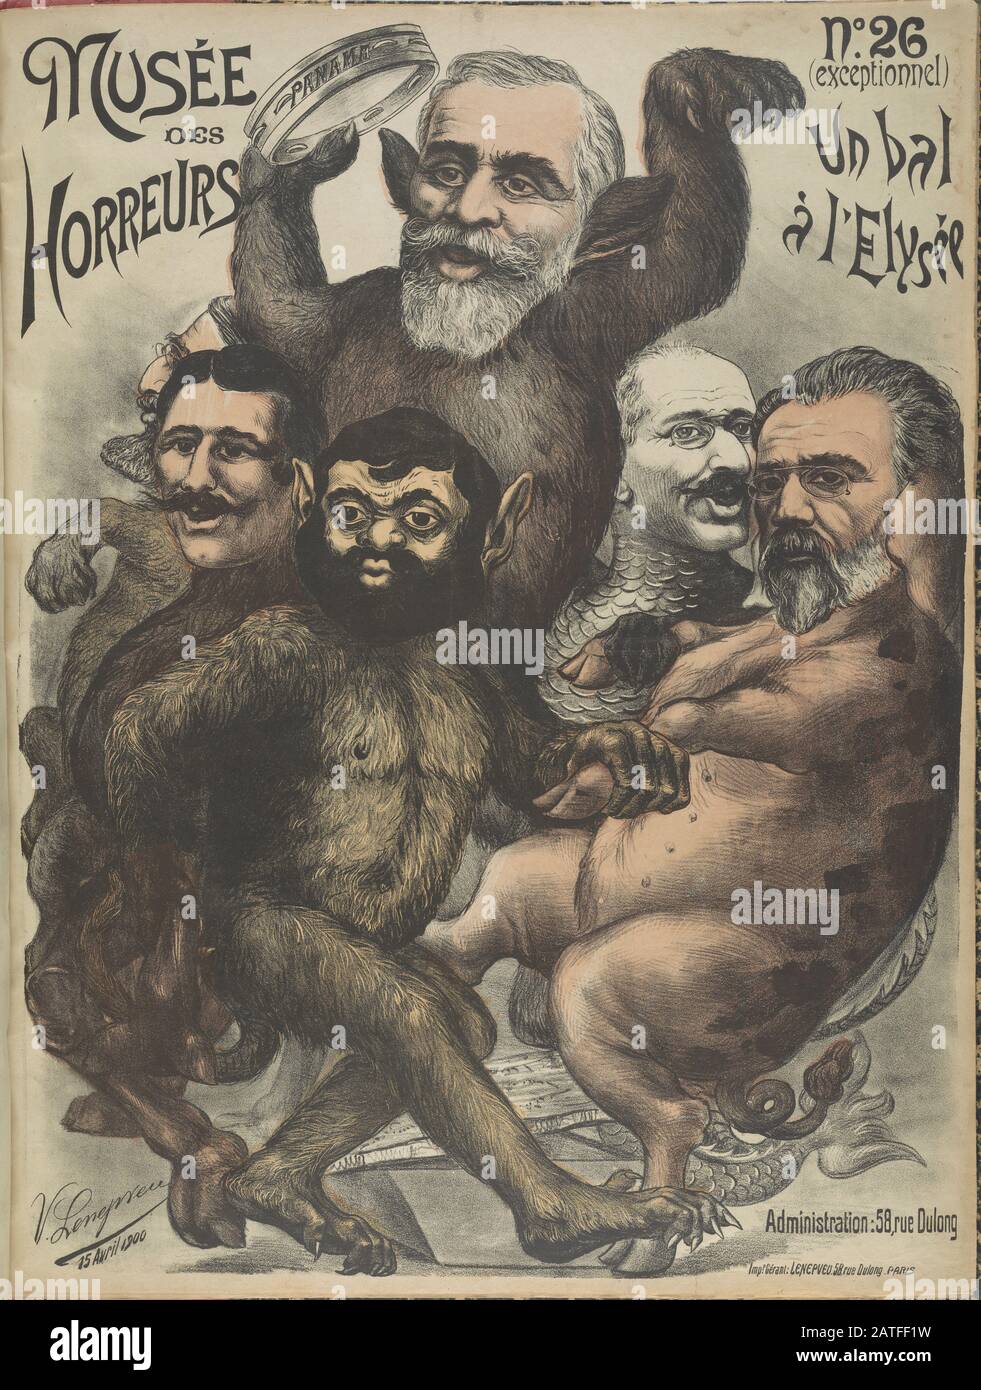 Musée des Horreurs - No. 26 Un bal à l'Elysée - 1899 - Lenepveu, V. -  Caricatures of several prominent figures in the Dreyfus Affair as animals  dancing together at a ball